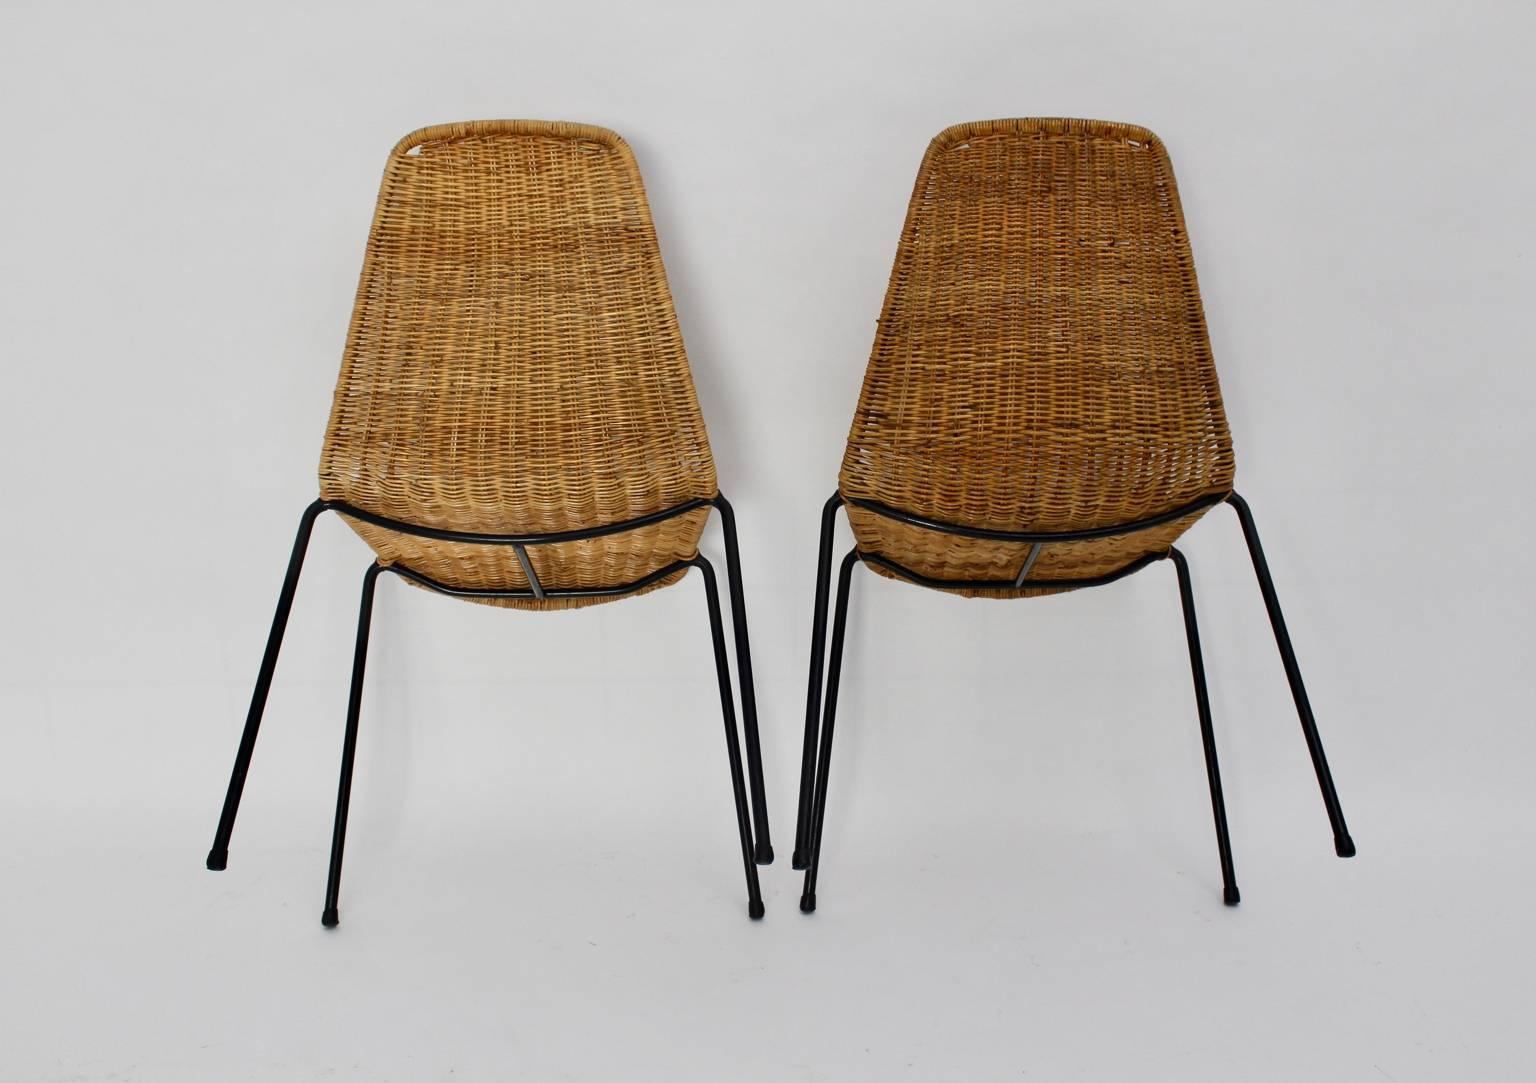 Midcentury Modern Rattan Two Chairs Basket Gian Franco Legler, 1951, Switzerland 1